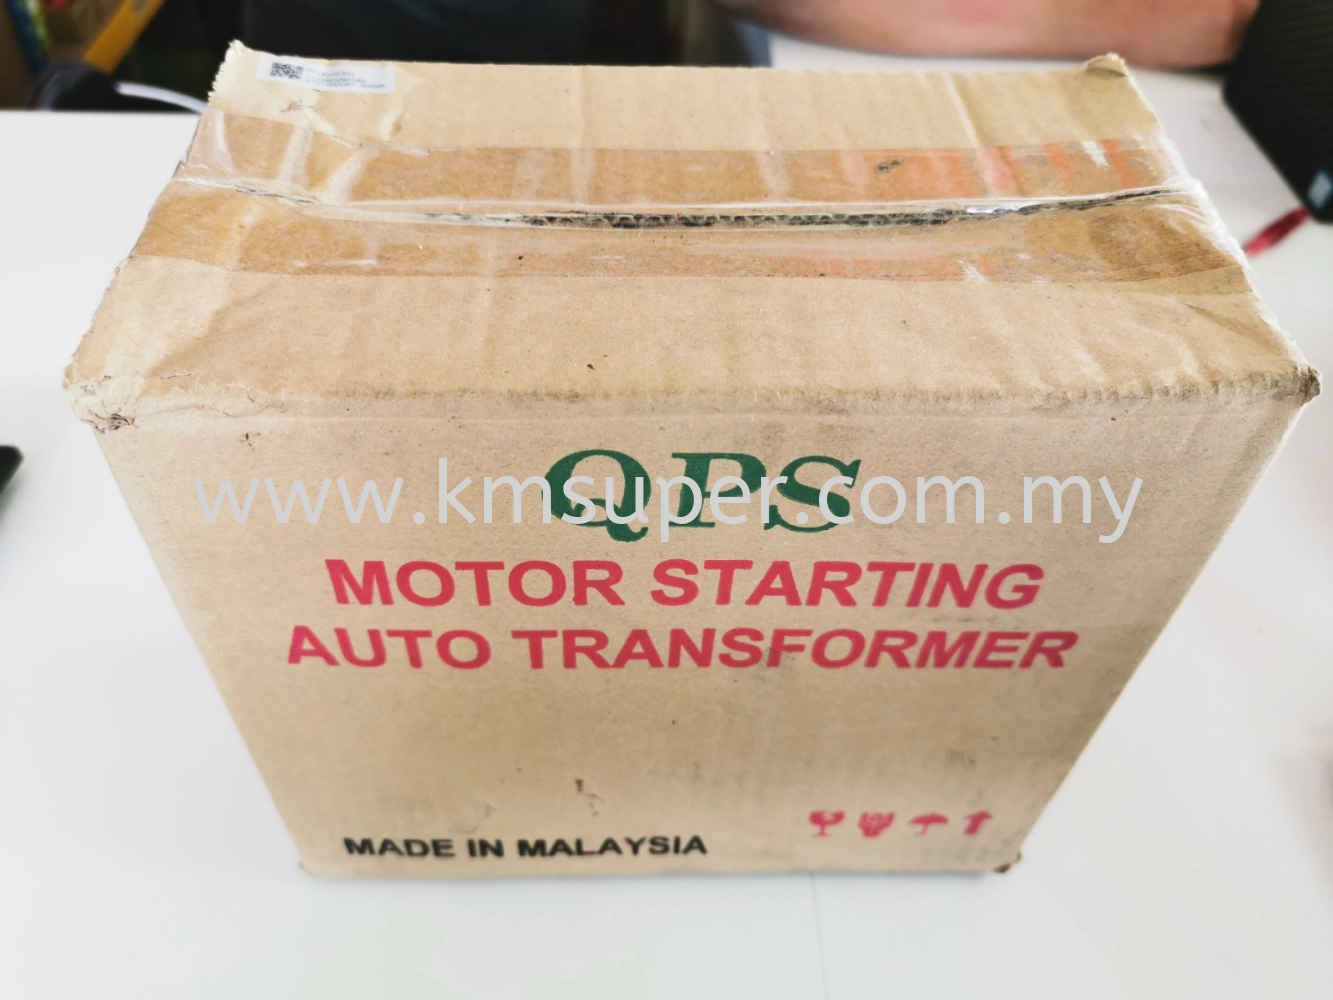 QPS 5.5KW MOTOR STARTING AUTO TRANSFORMER